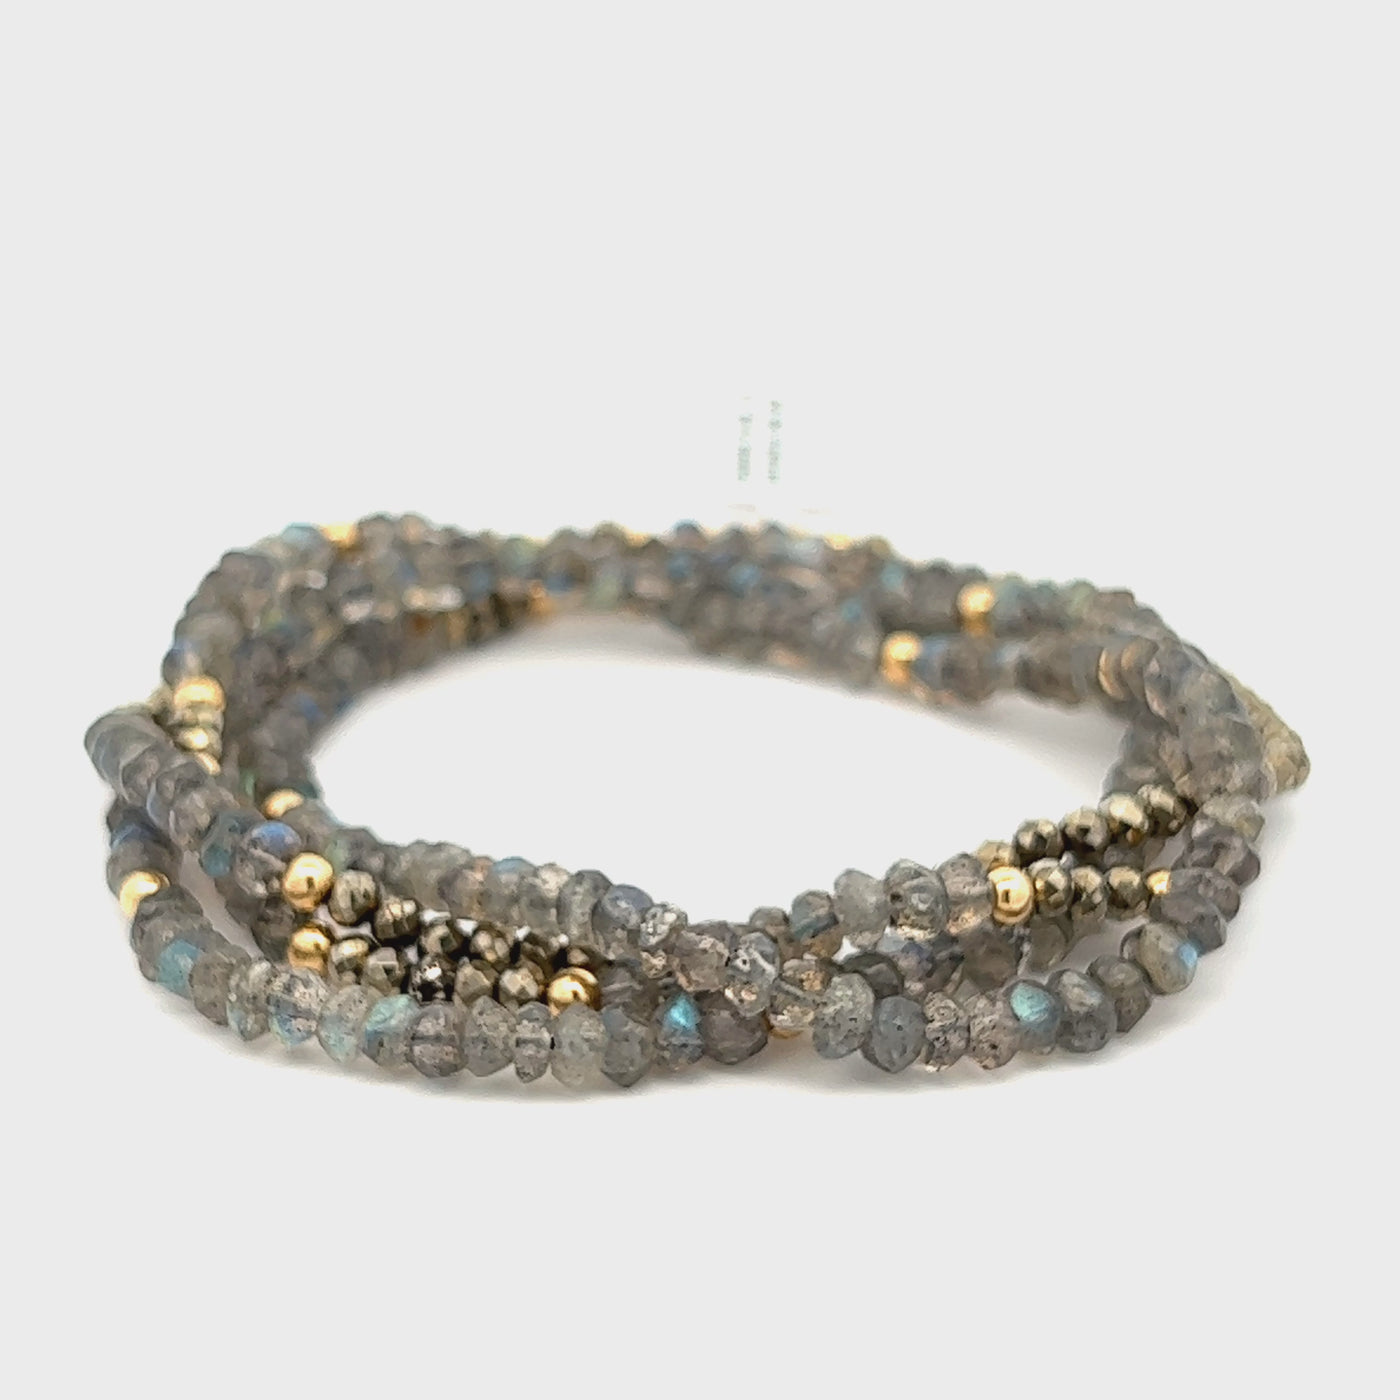 Labradorite & Pyrite Gold Filled 28.25" Necklace or Bracelet Wrap